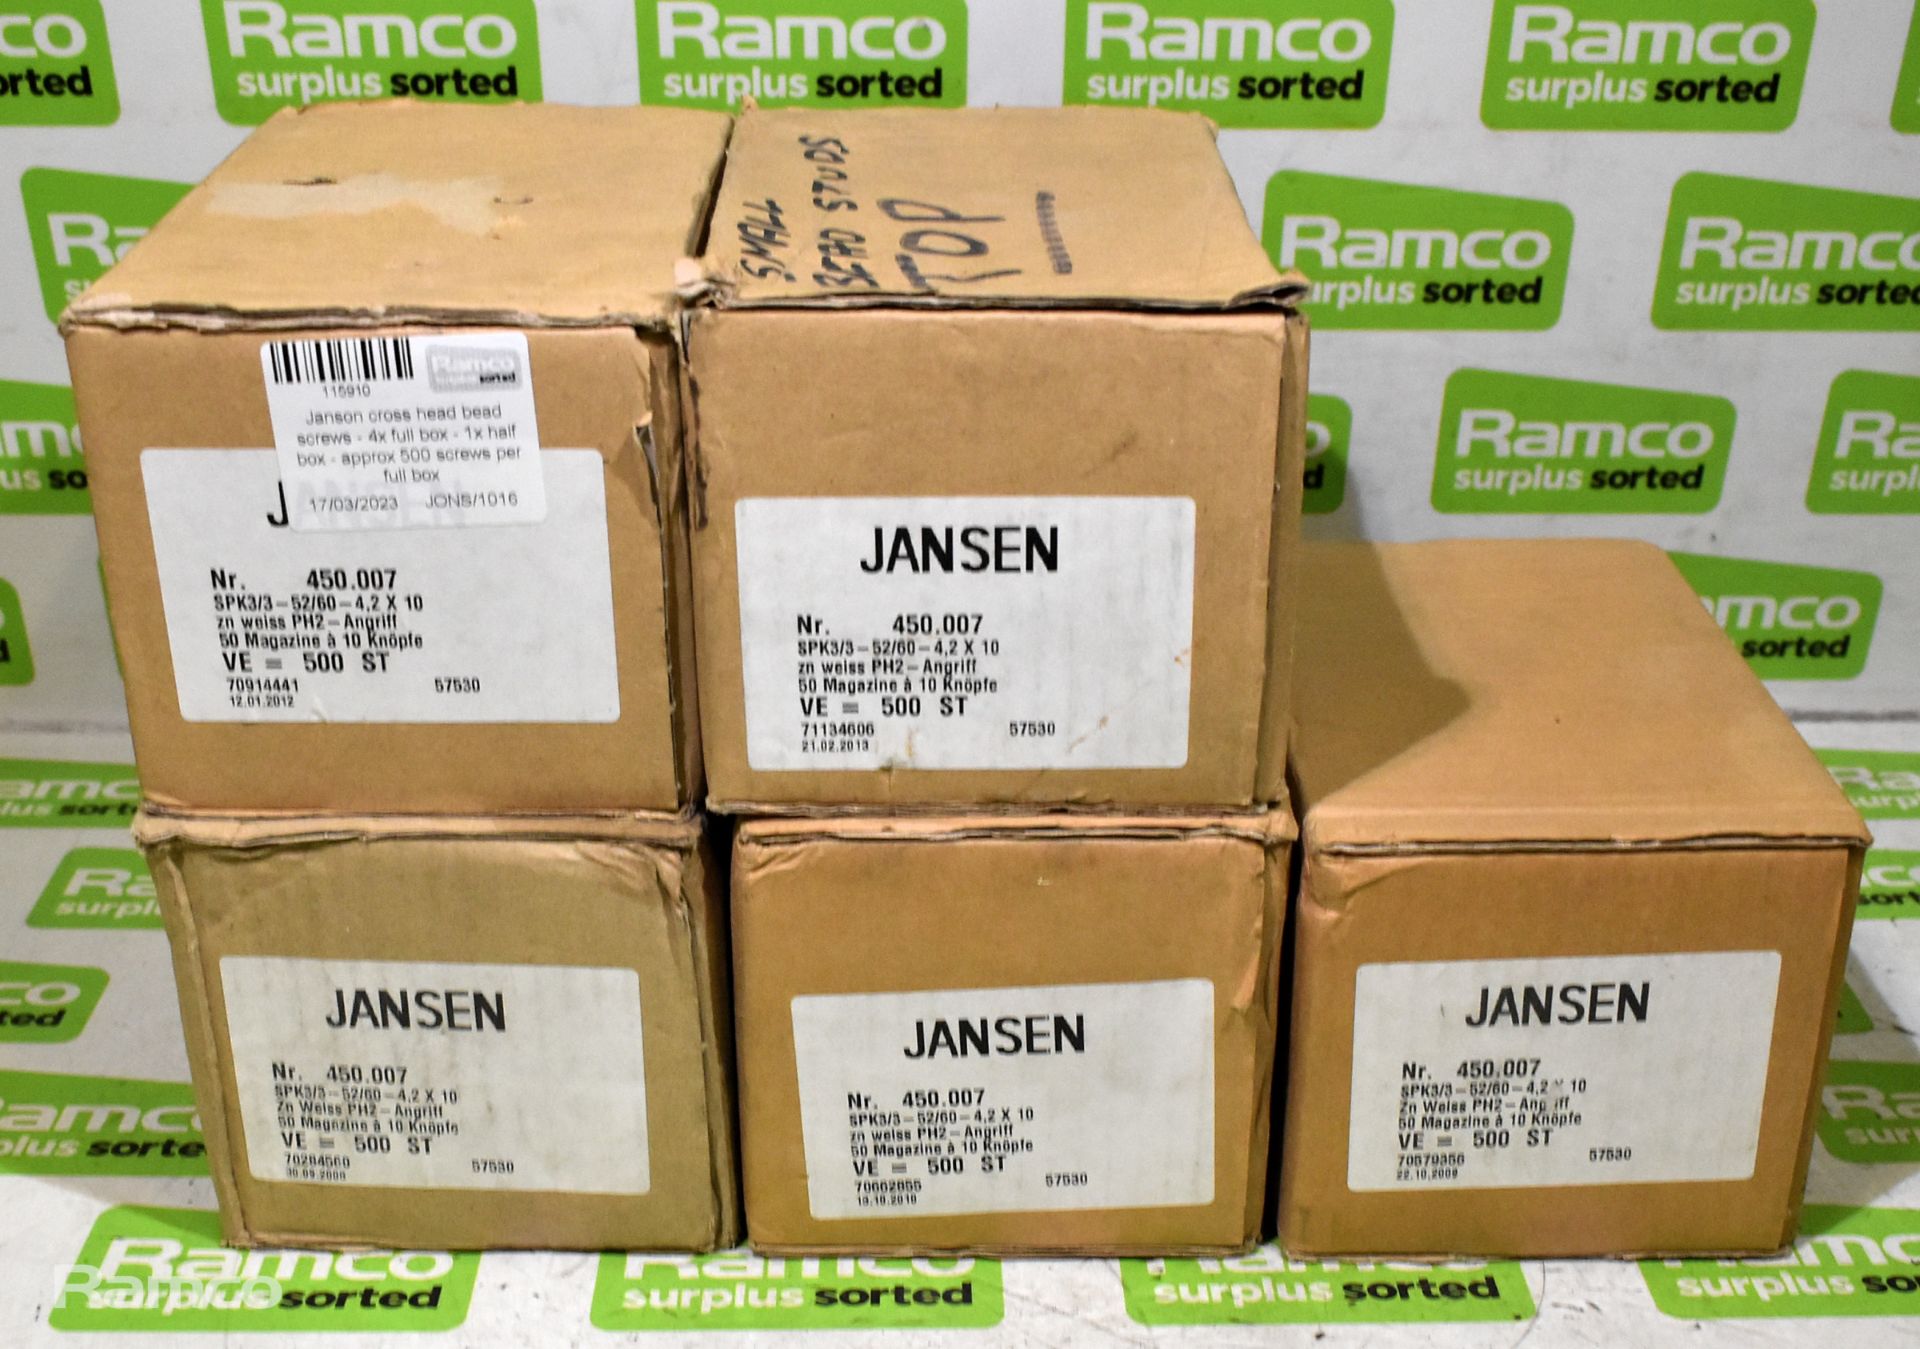 Jansen cross head bead screws - 4x full box - 1x half box - approx 500 screws per full box - Image 5 of 6